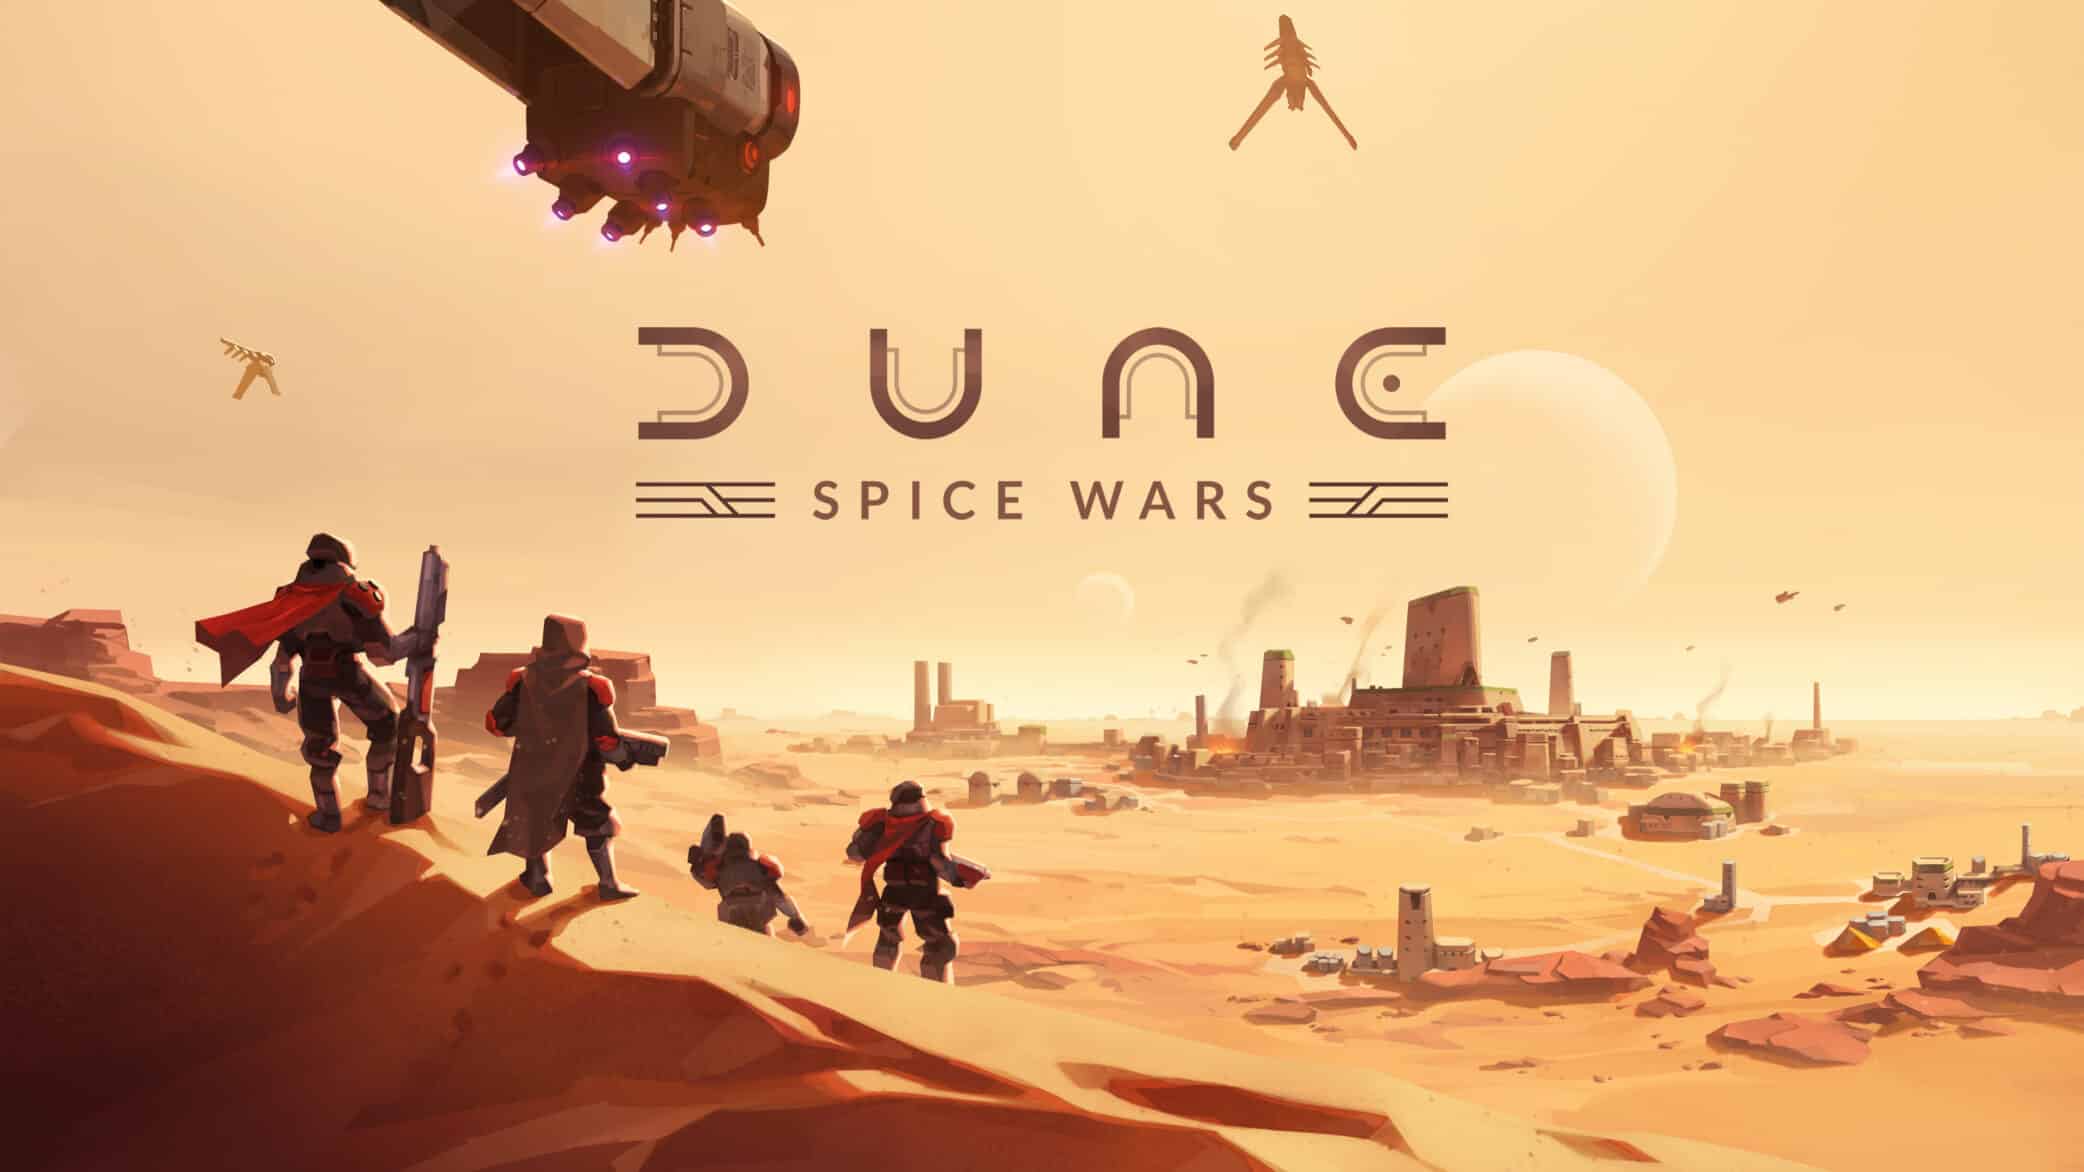 Dune: Spice Wars v1.0 Review